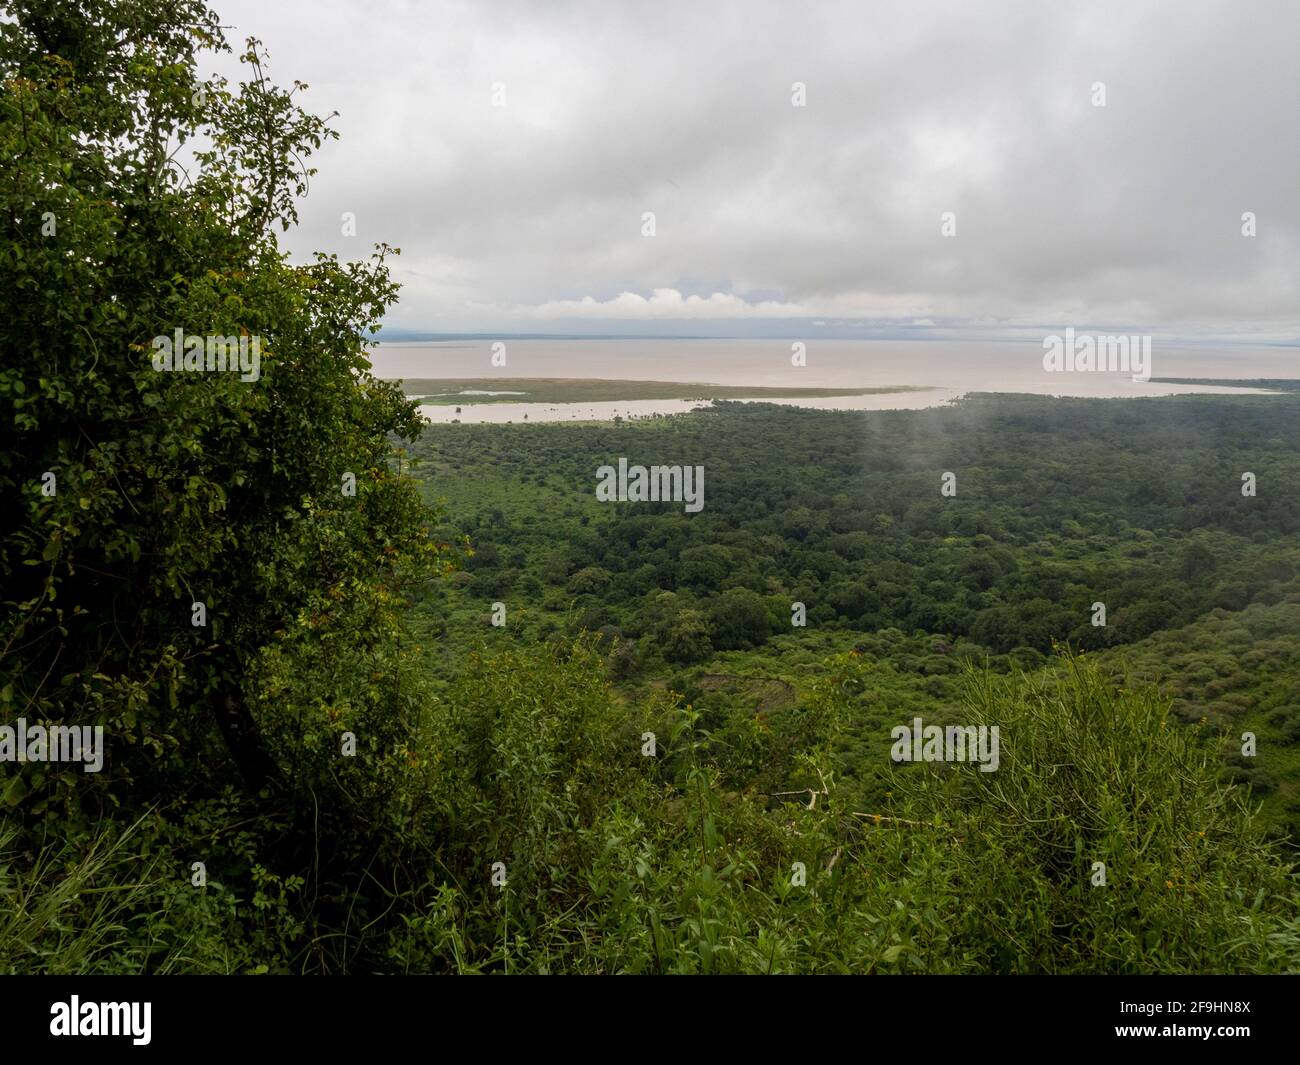 Lake Manyara, Tanzania, Africa - March 2, 2020: Scenic overlook of Lake Manyara Stock Photo